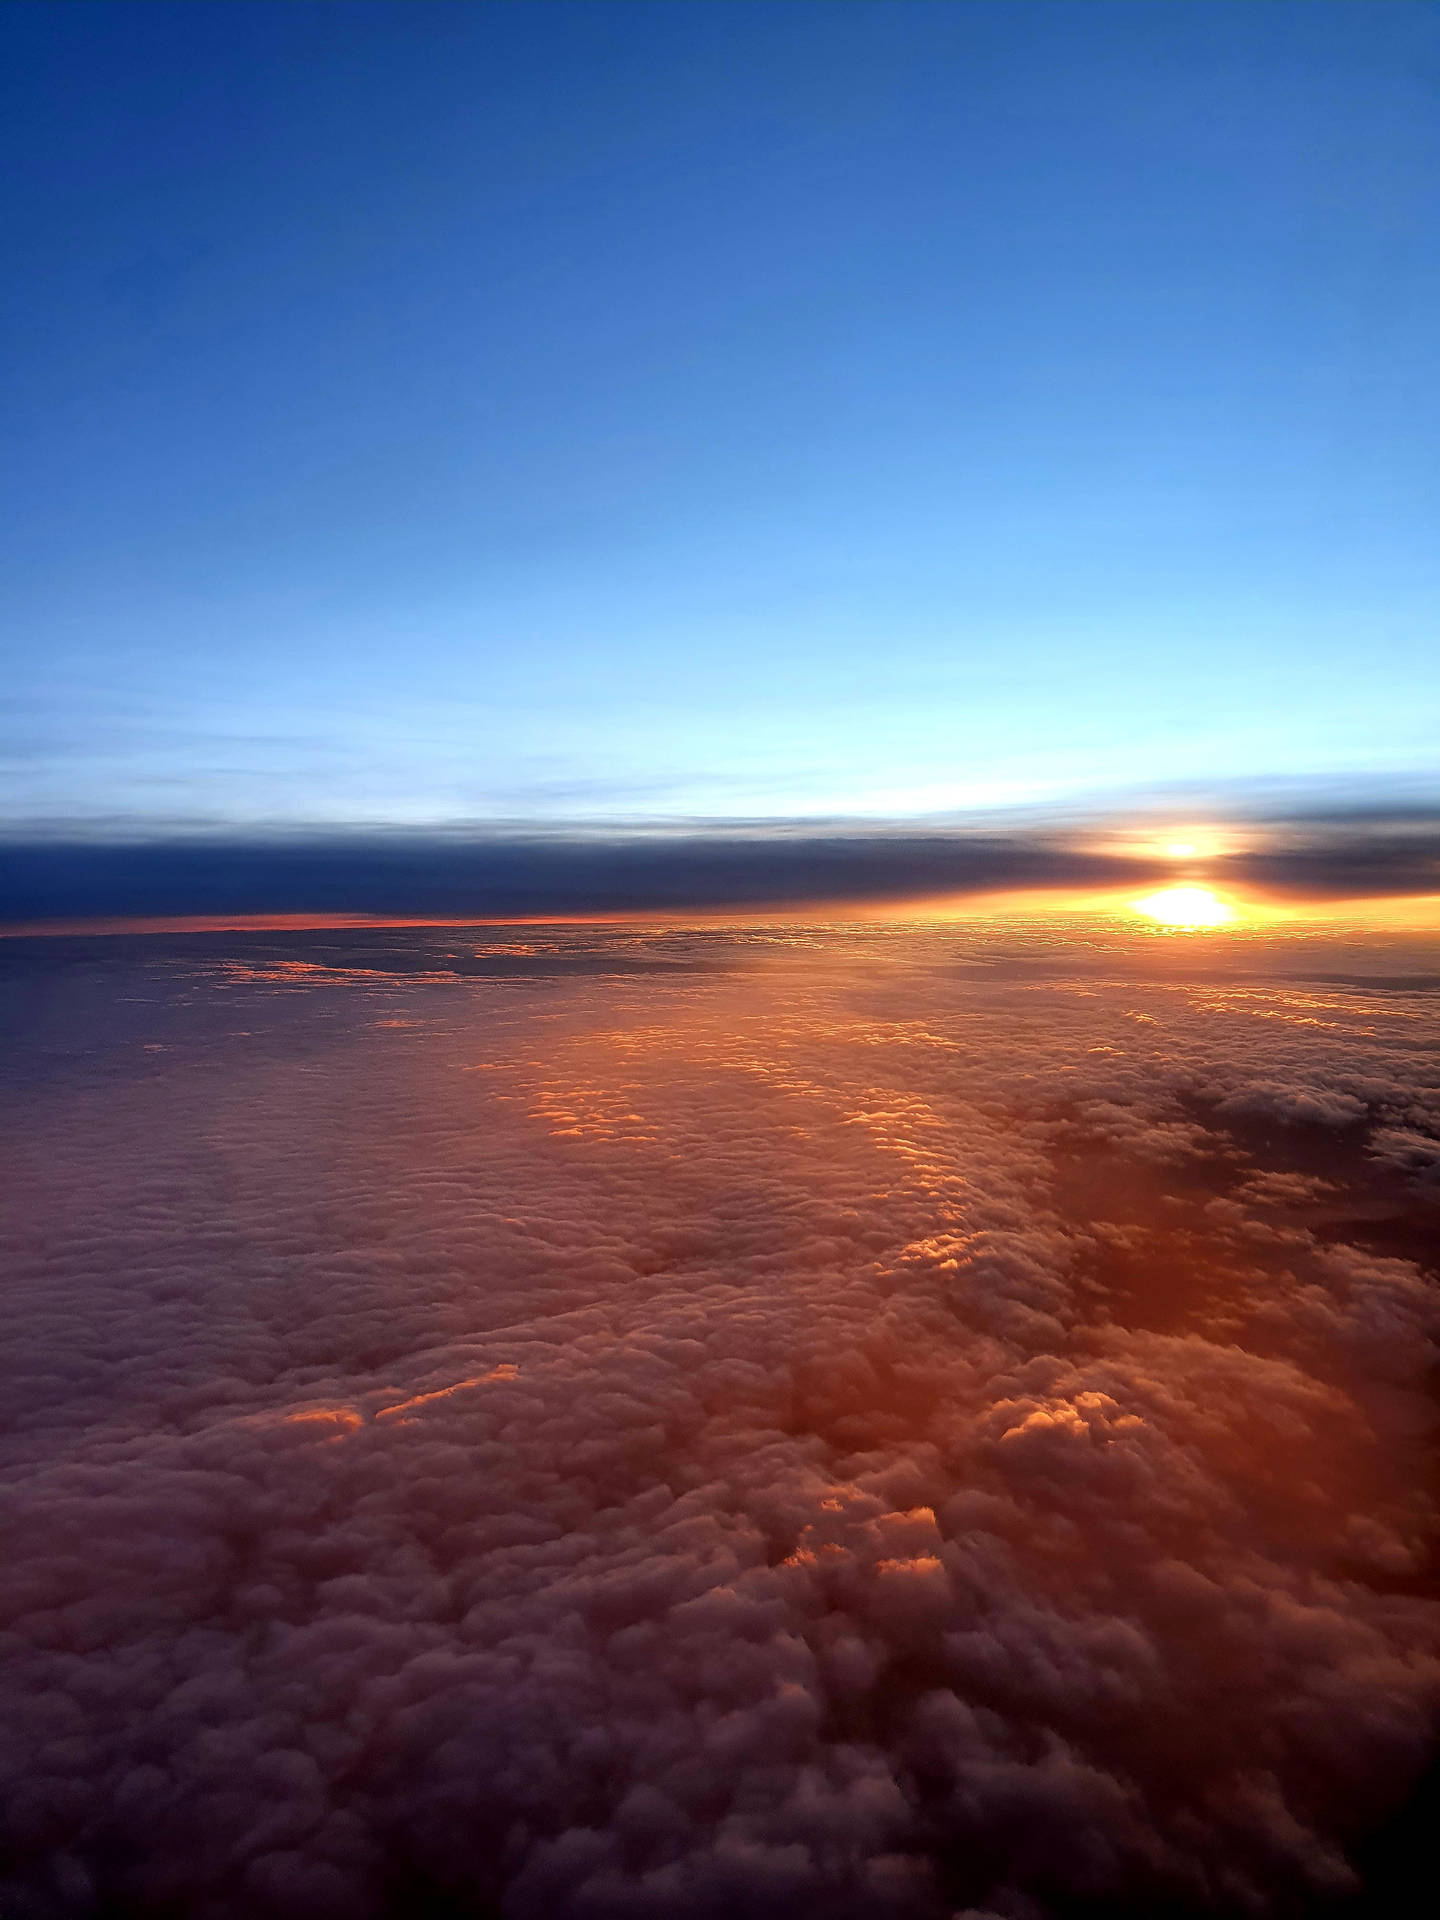 Download Rwanda Clouds And Sunset Wallpaper | Wallpapers.com